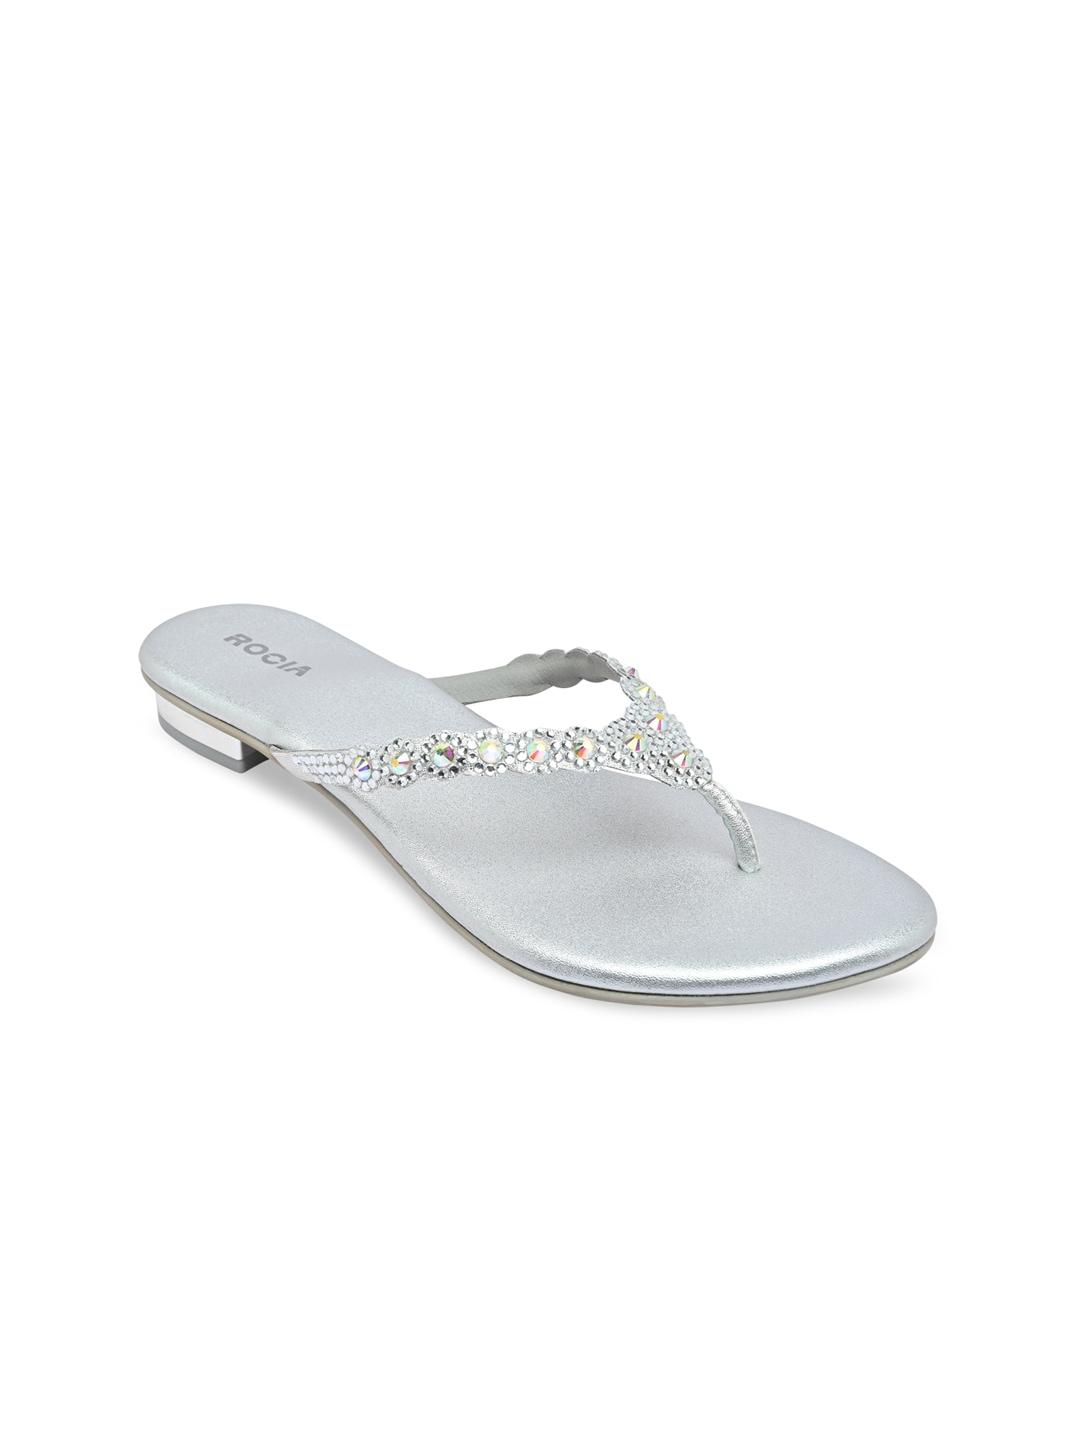 Rocia Women Silver-Toned Embellished Ethnic Open Toe Flats